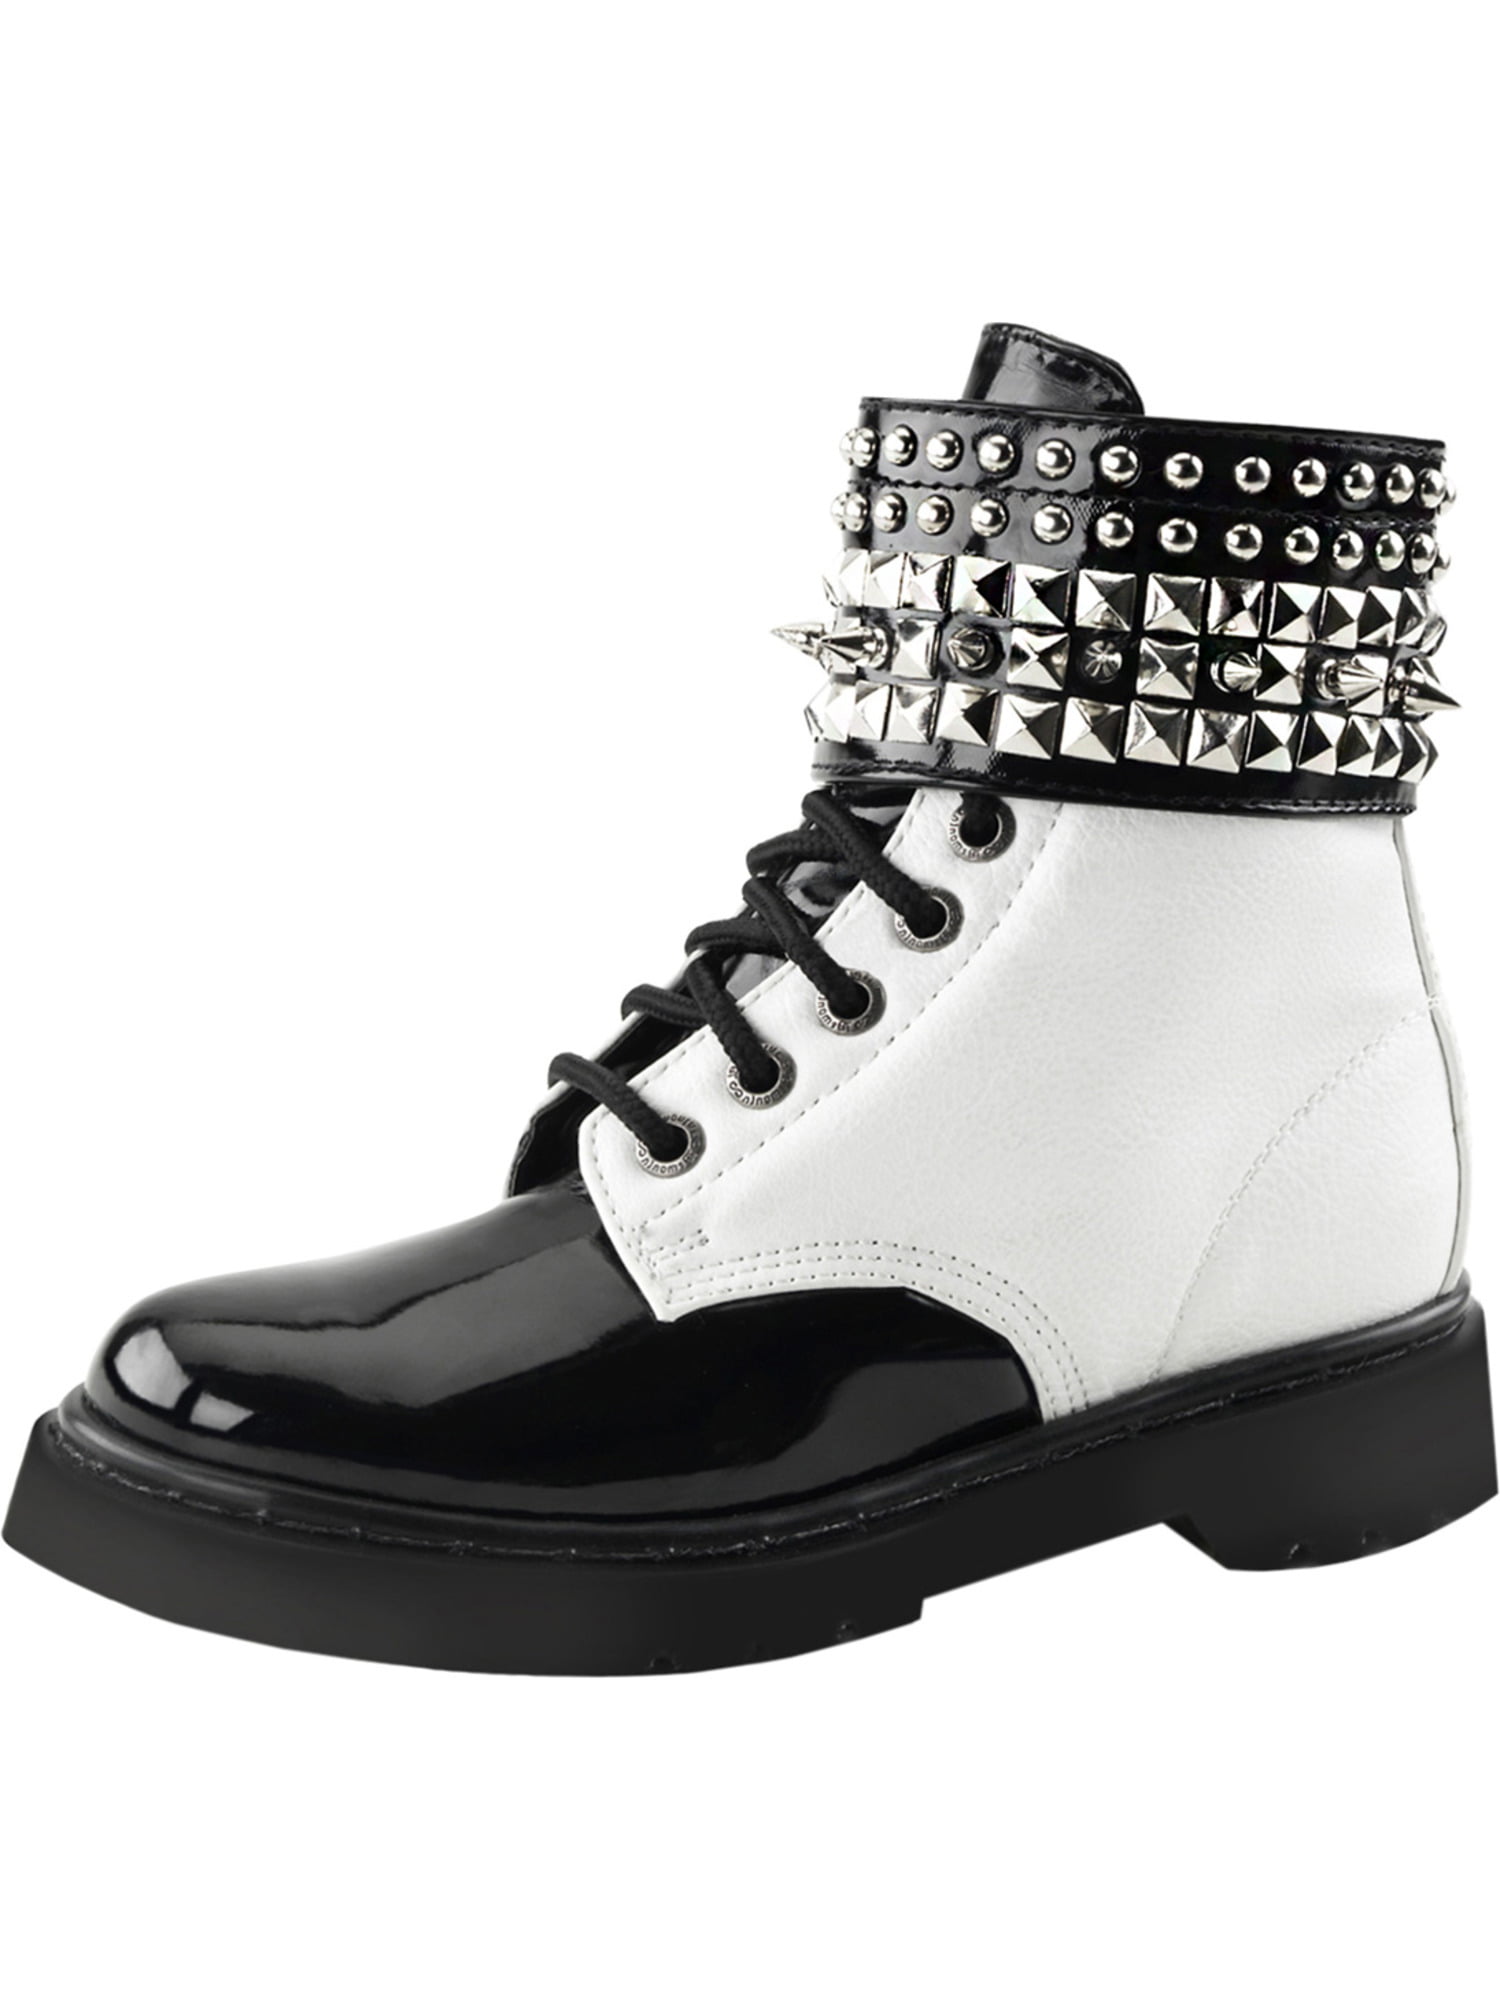 white combat boot heels